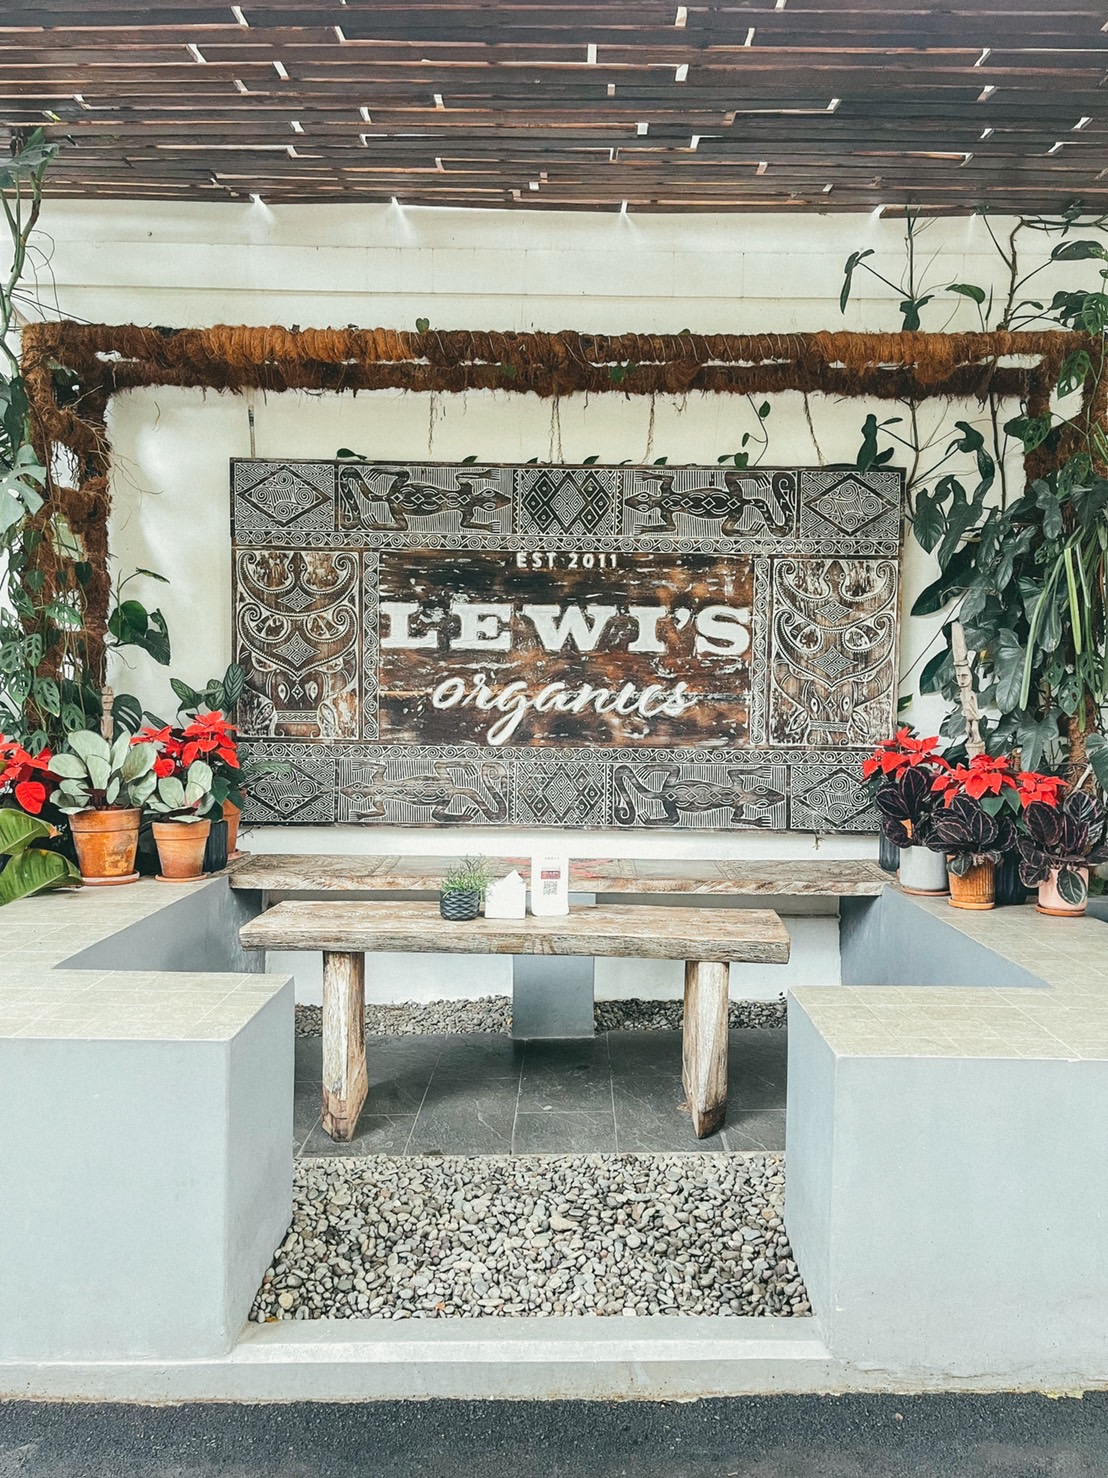 lewi's organic factory bintaro